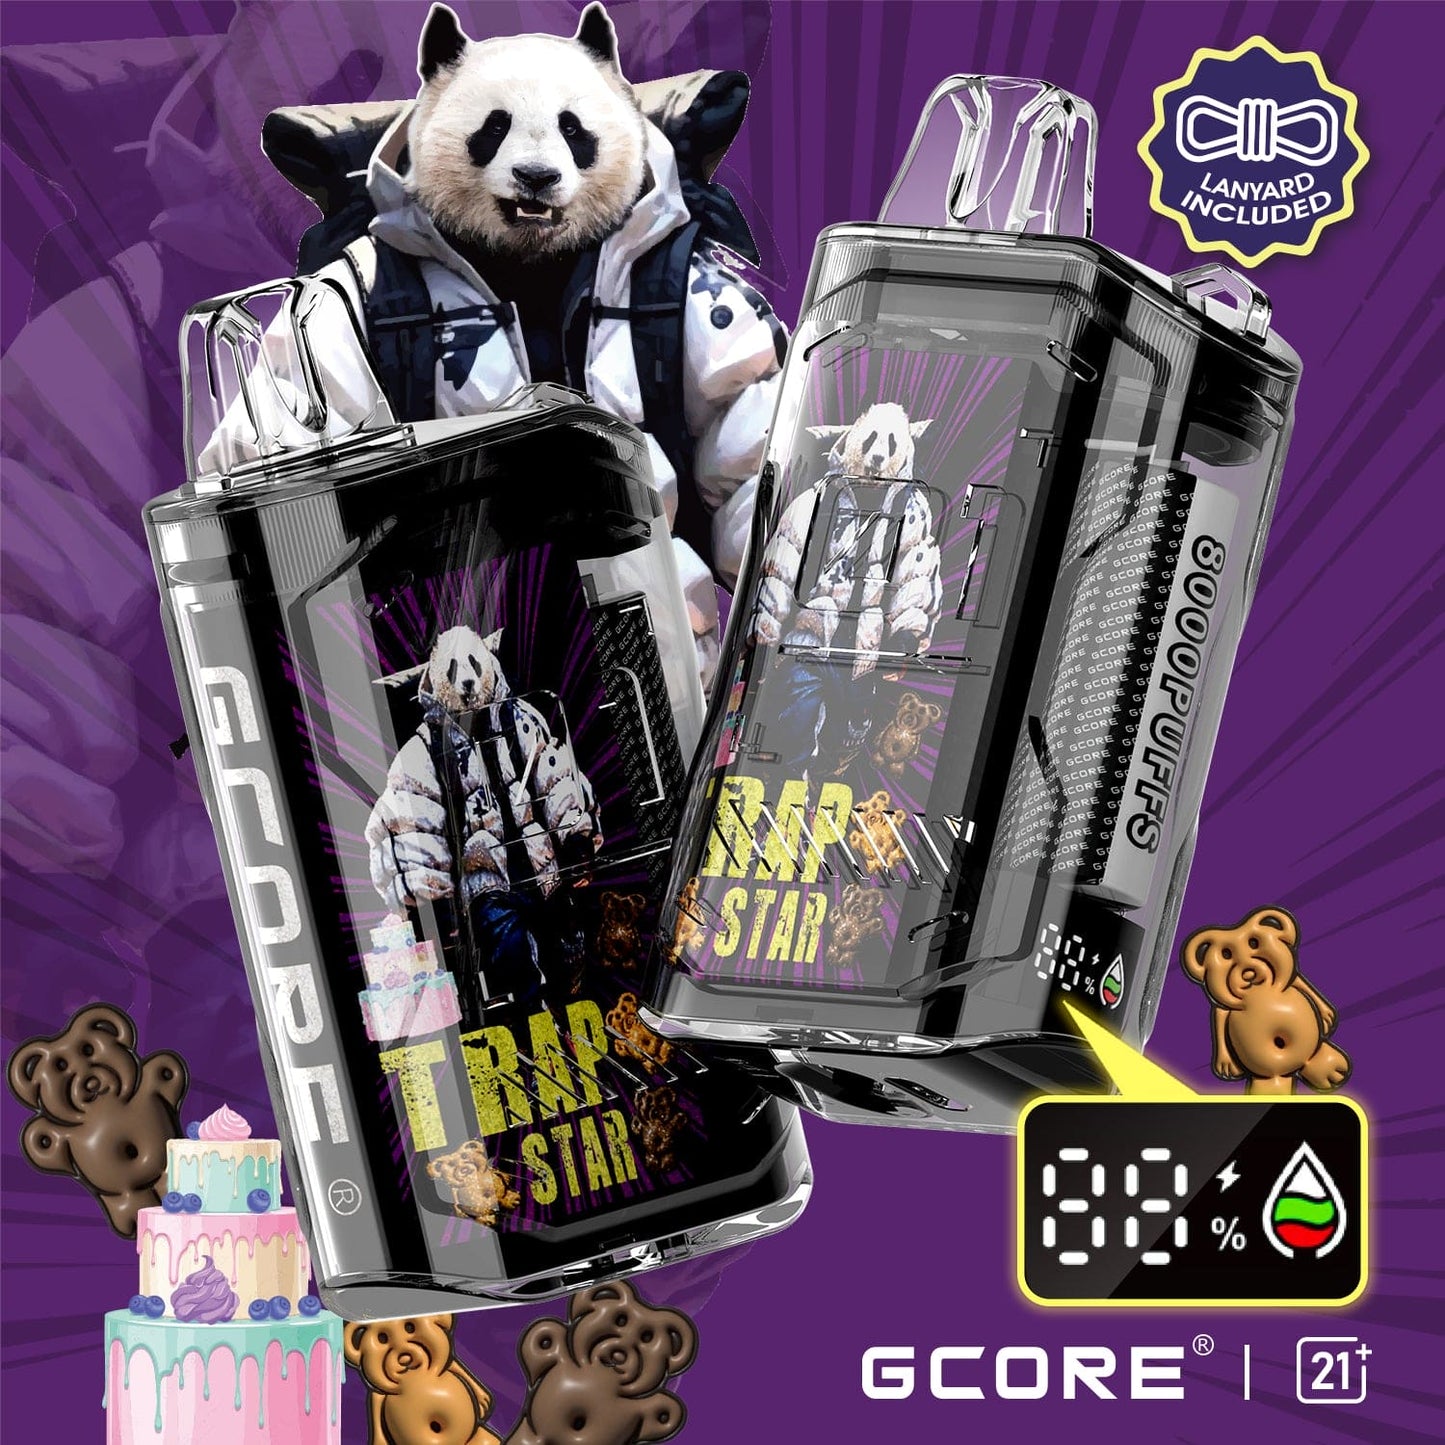 Gcore DG 8000 Puffs 5% | Trap Star